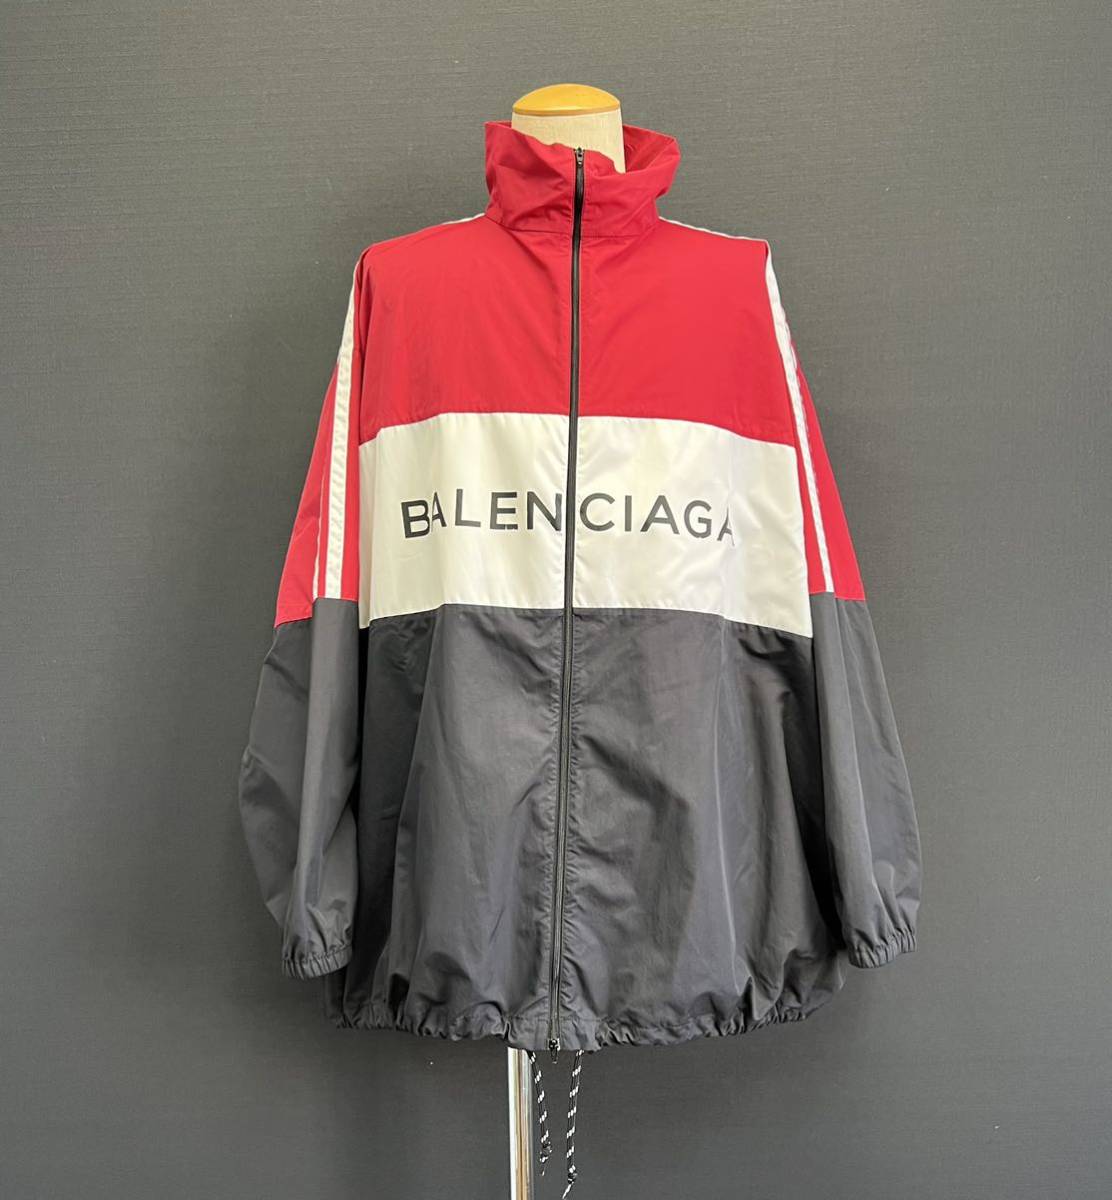 Balenciaga バレンシアガ トラックジャケット サイズ39 bracaraaugusta.com